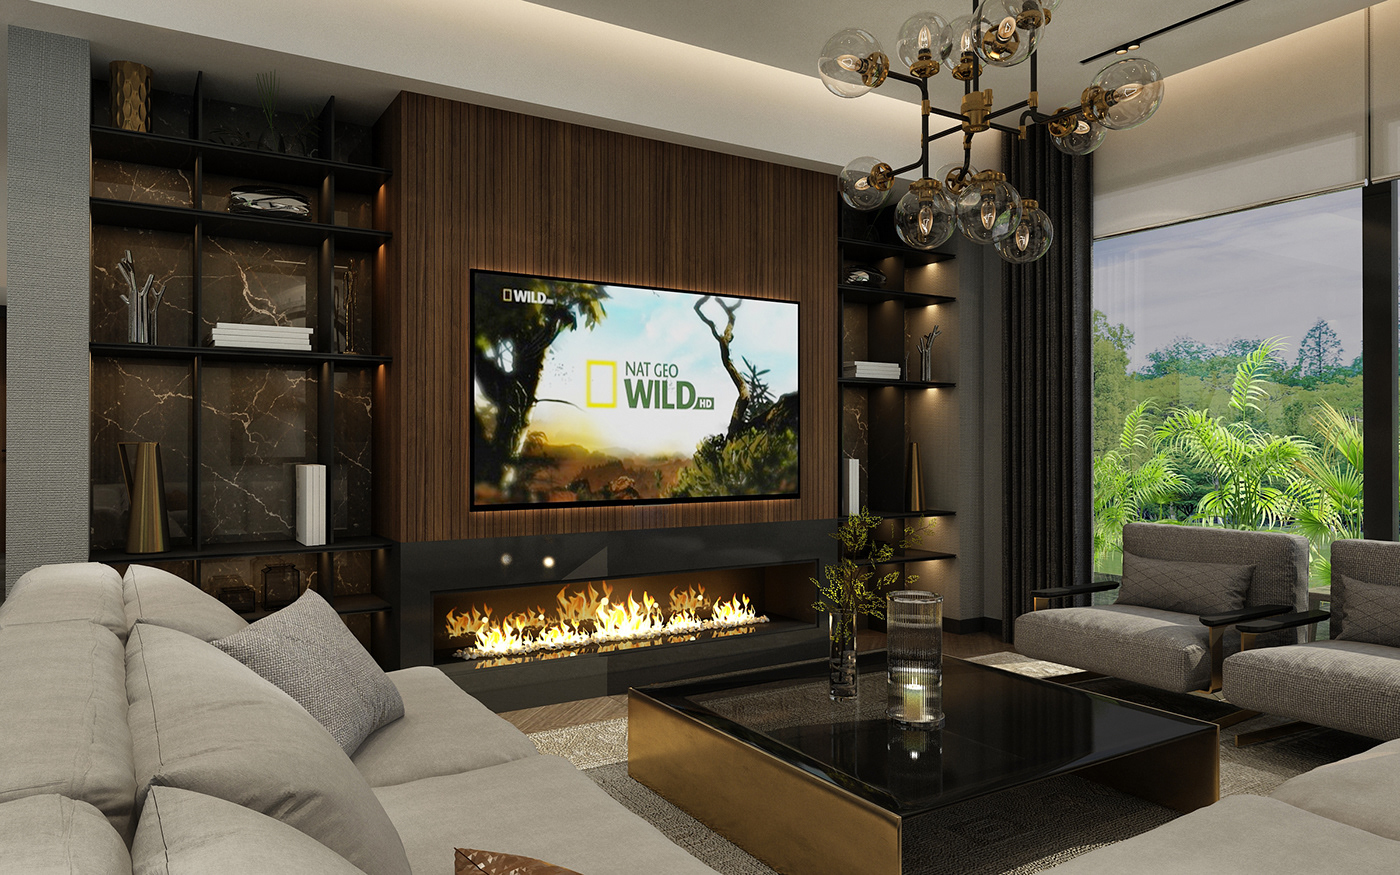 3D 3ds max architecture interior design  modern Render visualization vray